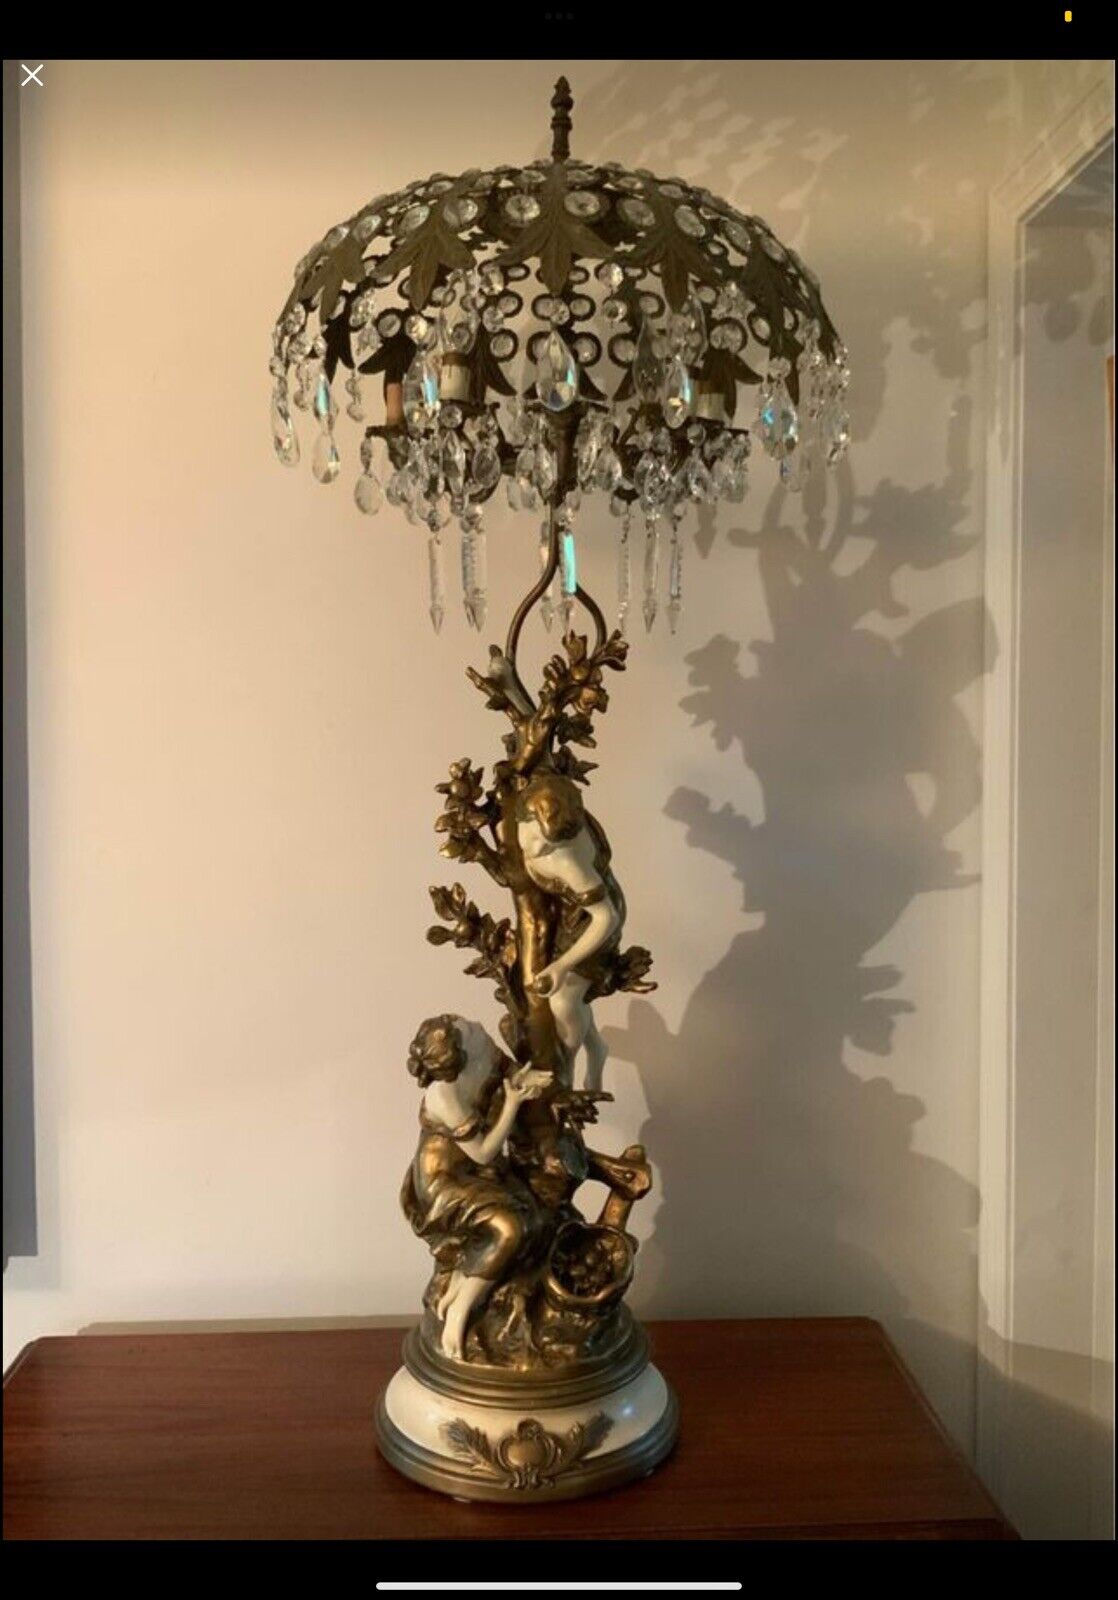 Exquisite Antique Figural Lamp With Crystal ‘Umbrella’ Shade